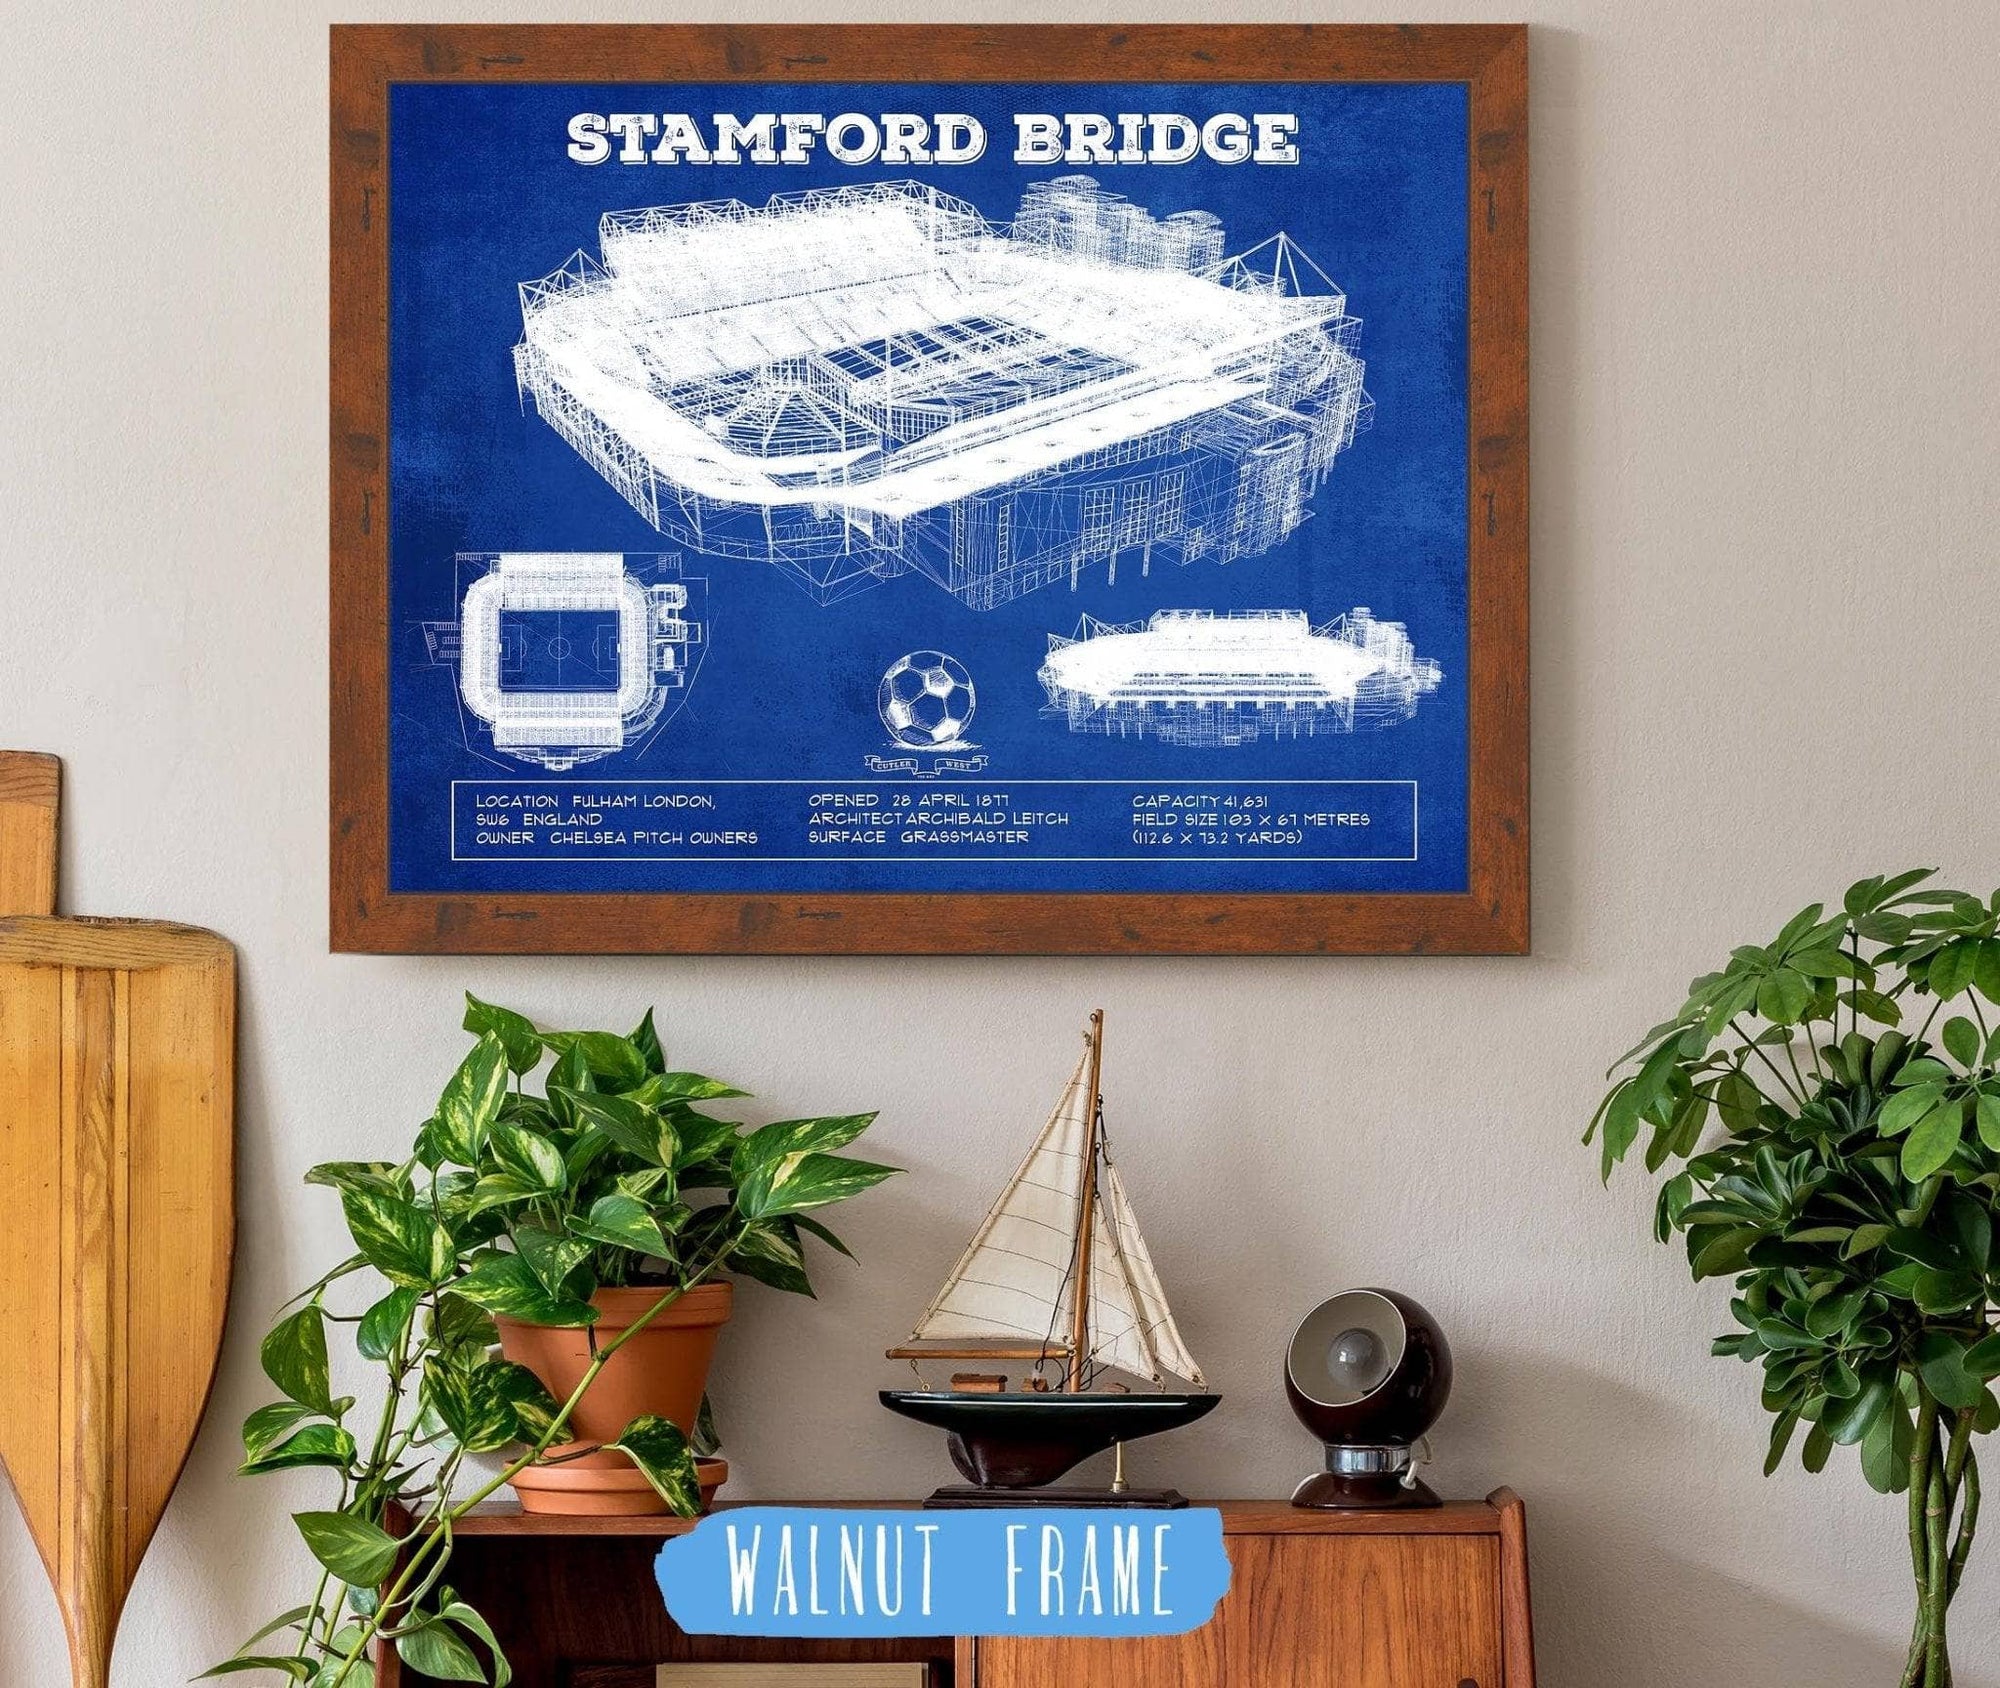 Cutler West Soccer Collection 14" x 11" / Walnut Frame Stamford Bridge - Chelsea FC European Football Soccer Stadium Print 700225520-TOP